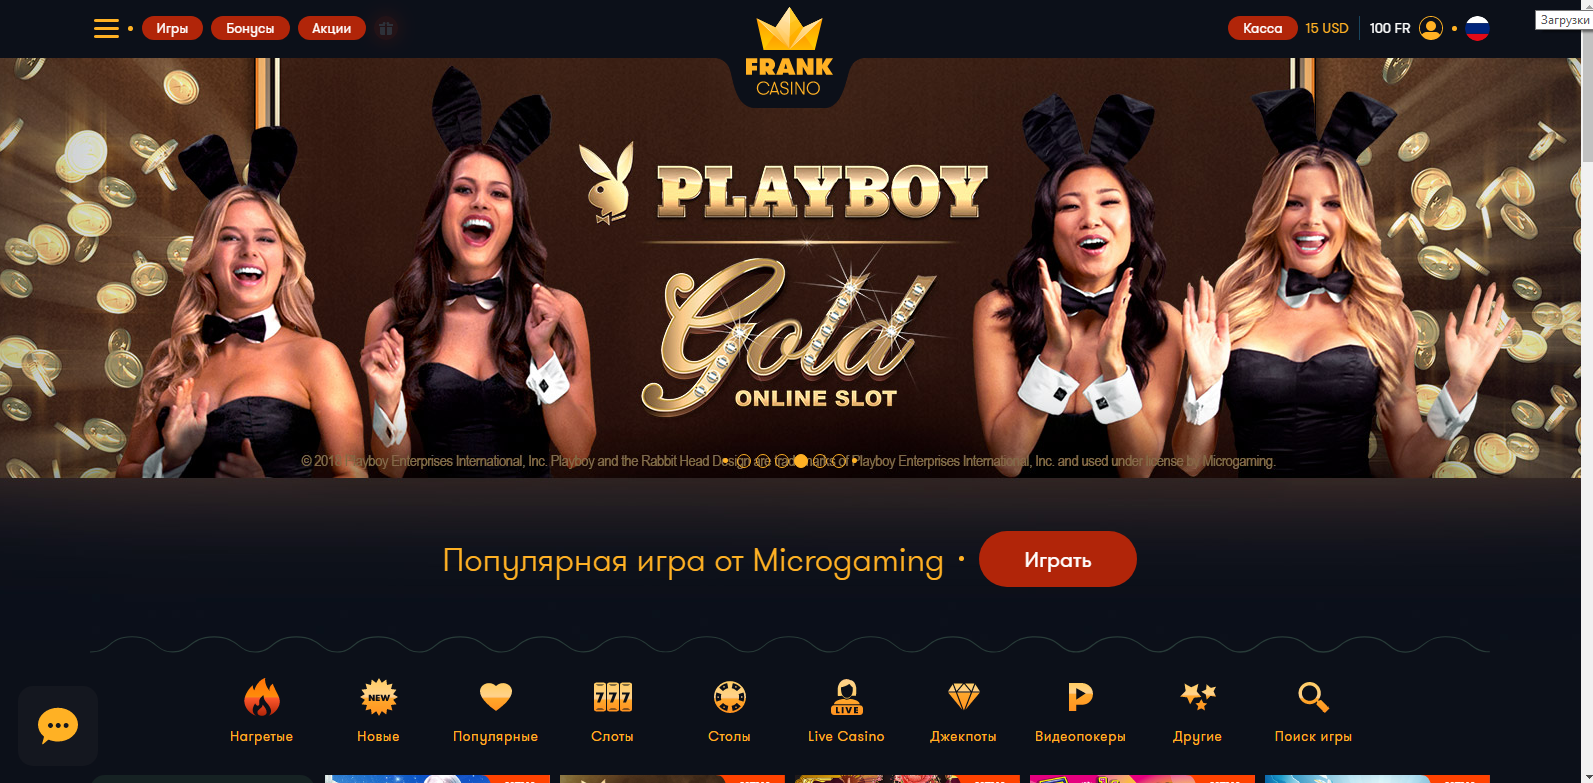 Https wdomain ru official casino frank org покердом сильвер лига пароль